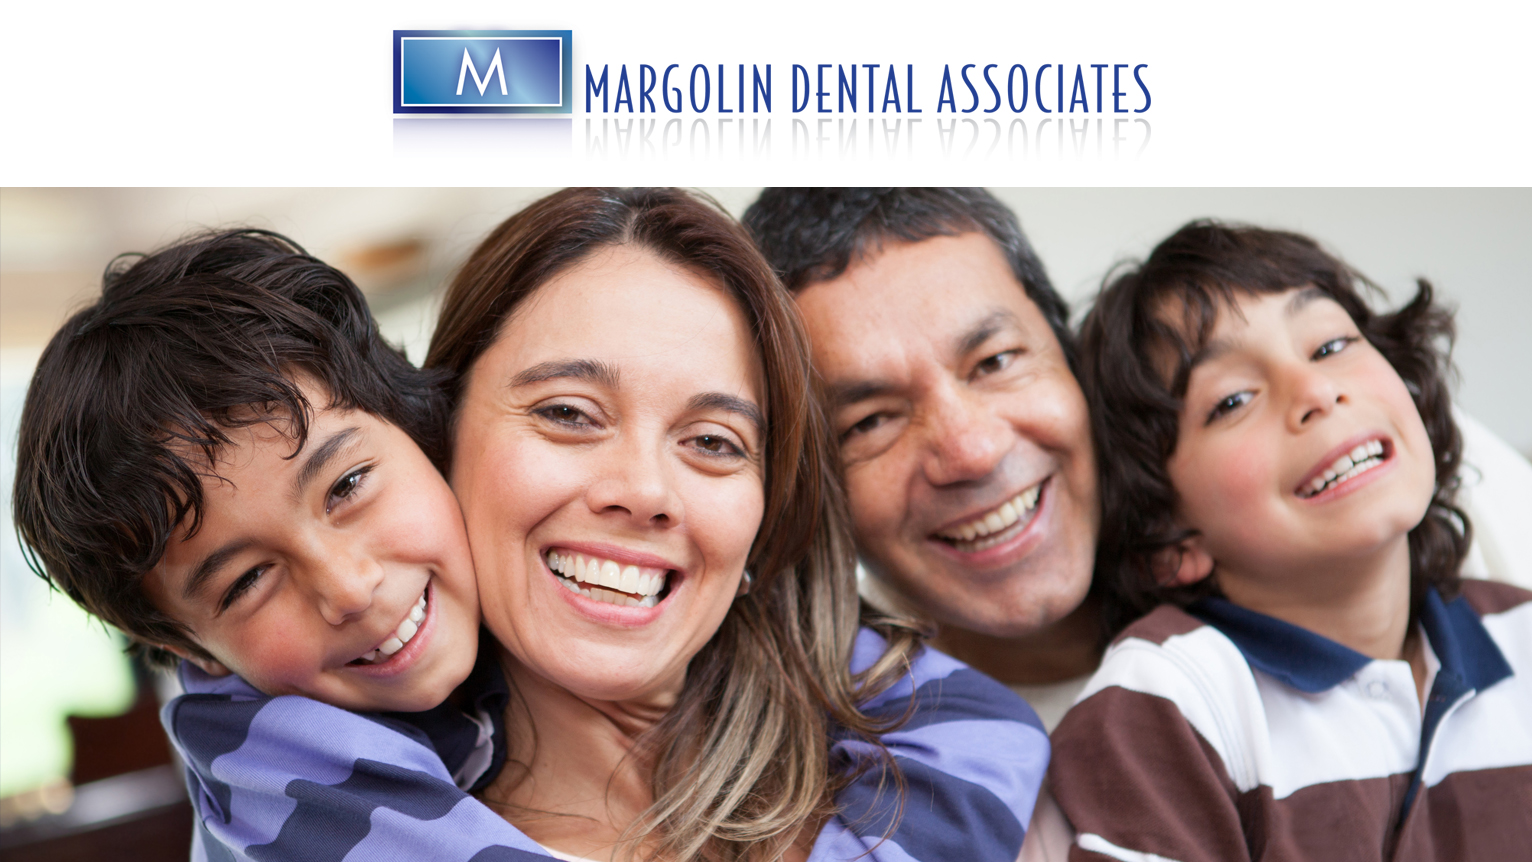 Photo of Margolin Dental Associates: Michael Margolin DMD in Englewood Cliffs City, New Jersey, United States - 3 Picture of Point of interest, Establishment, Health, Dentist